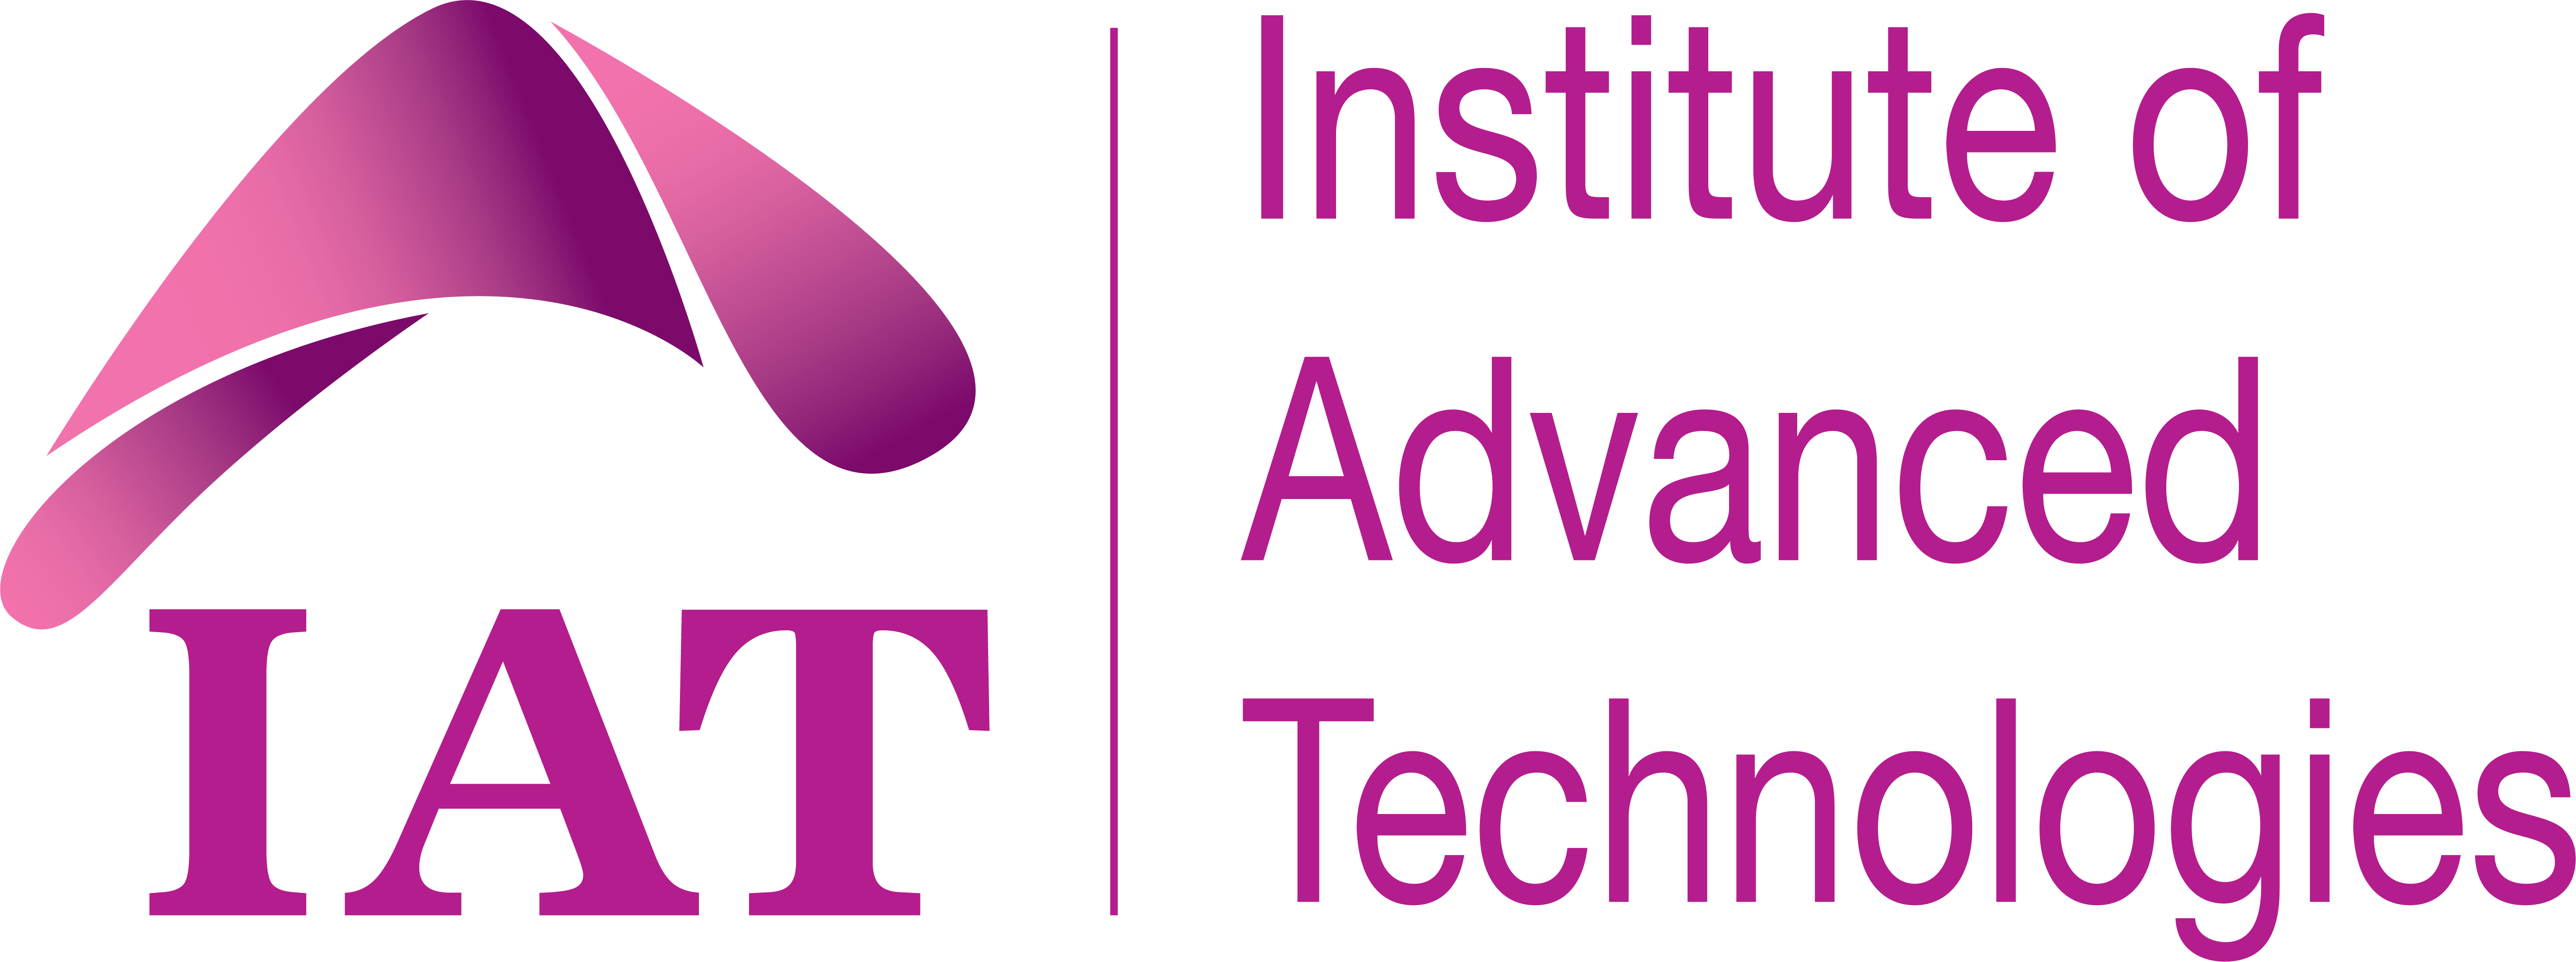 Institute of Advanced Technologies